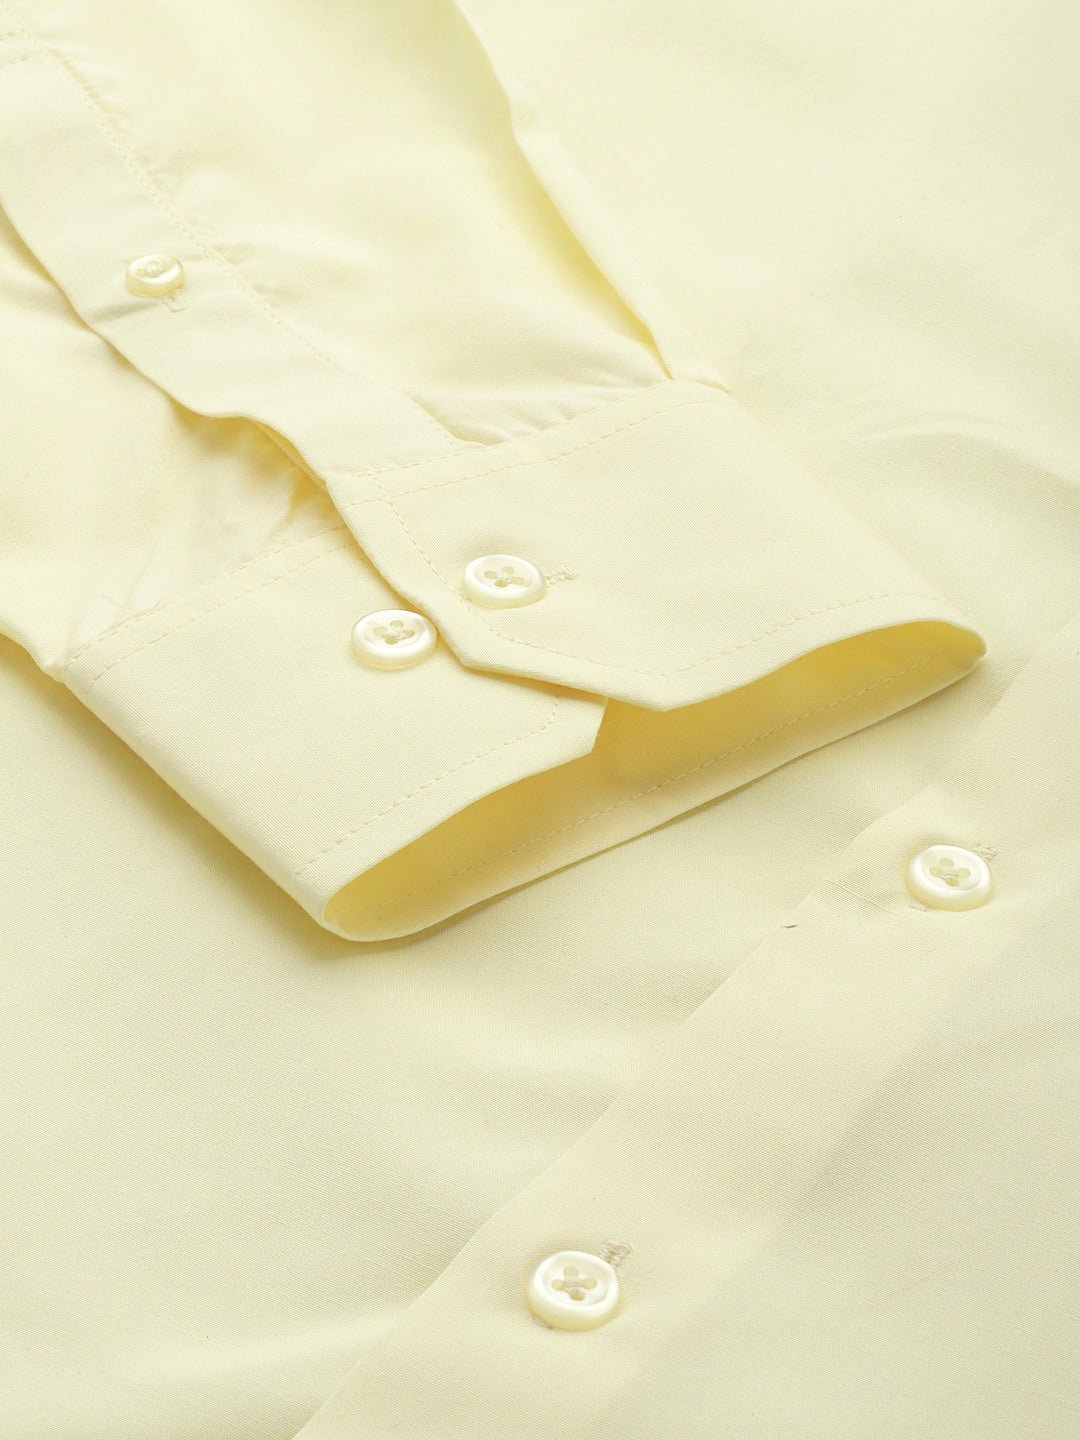 Men Lemon Solids Slim Fit Formal Shirt - #folk republic#